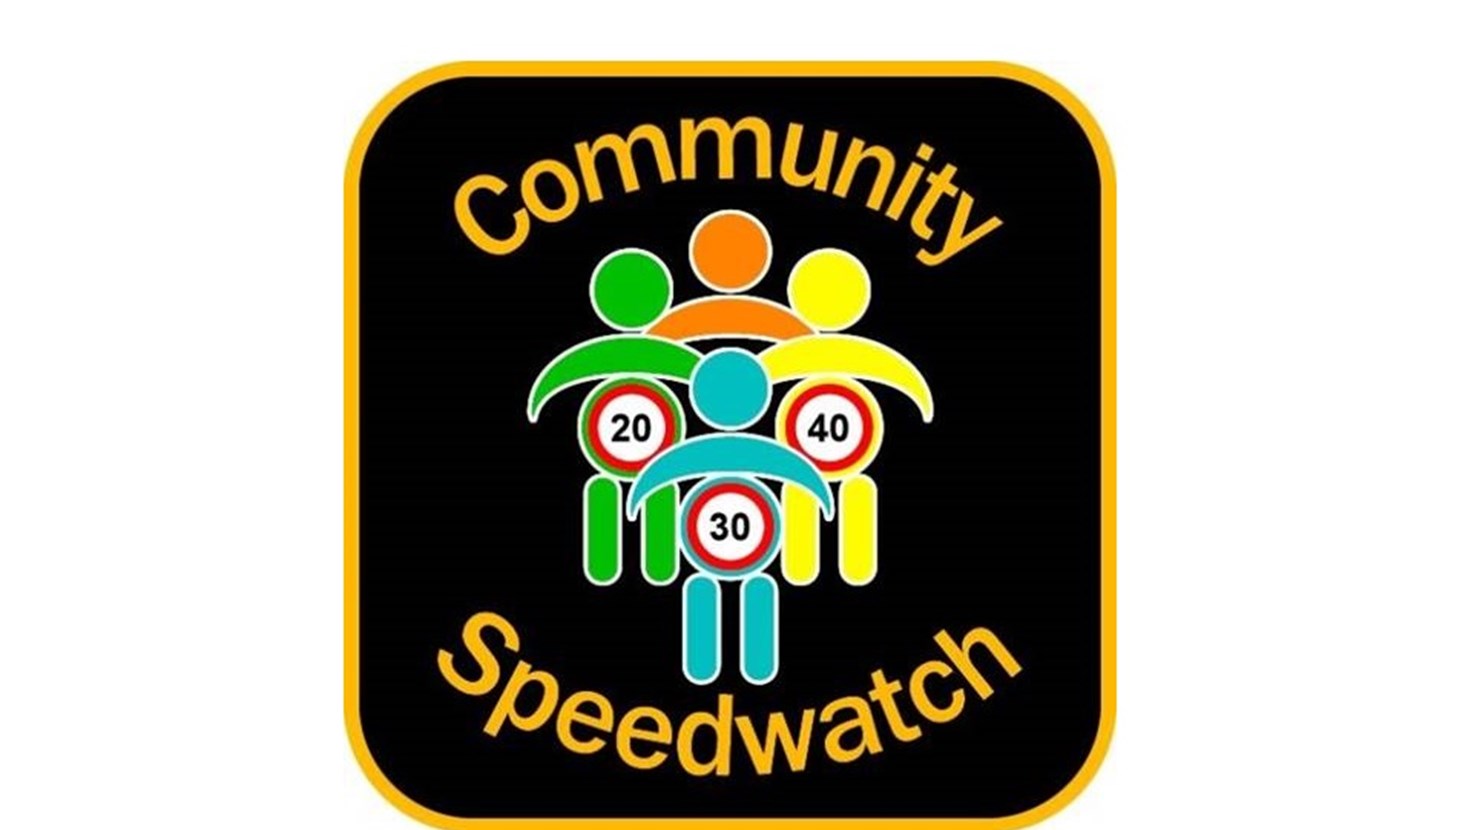 Community Speed Watch 